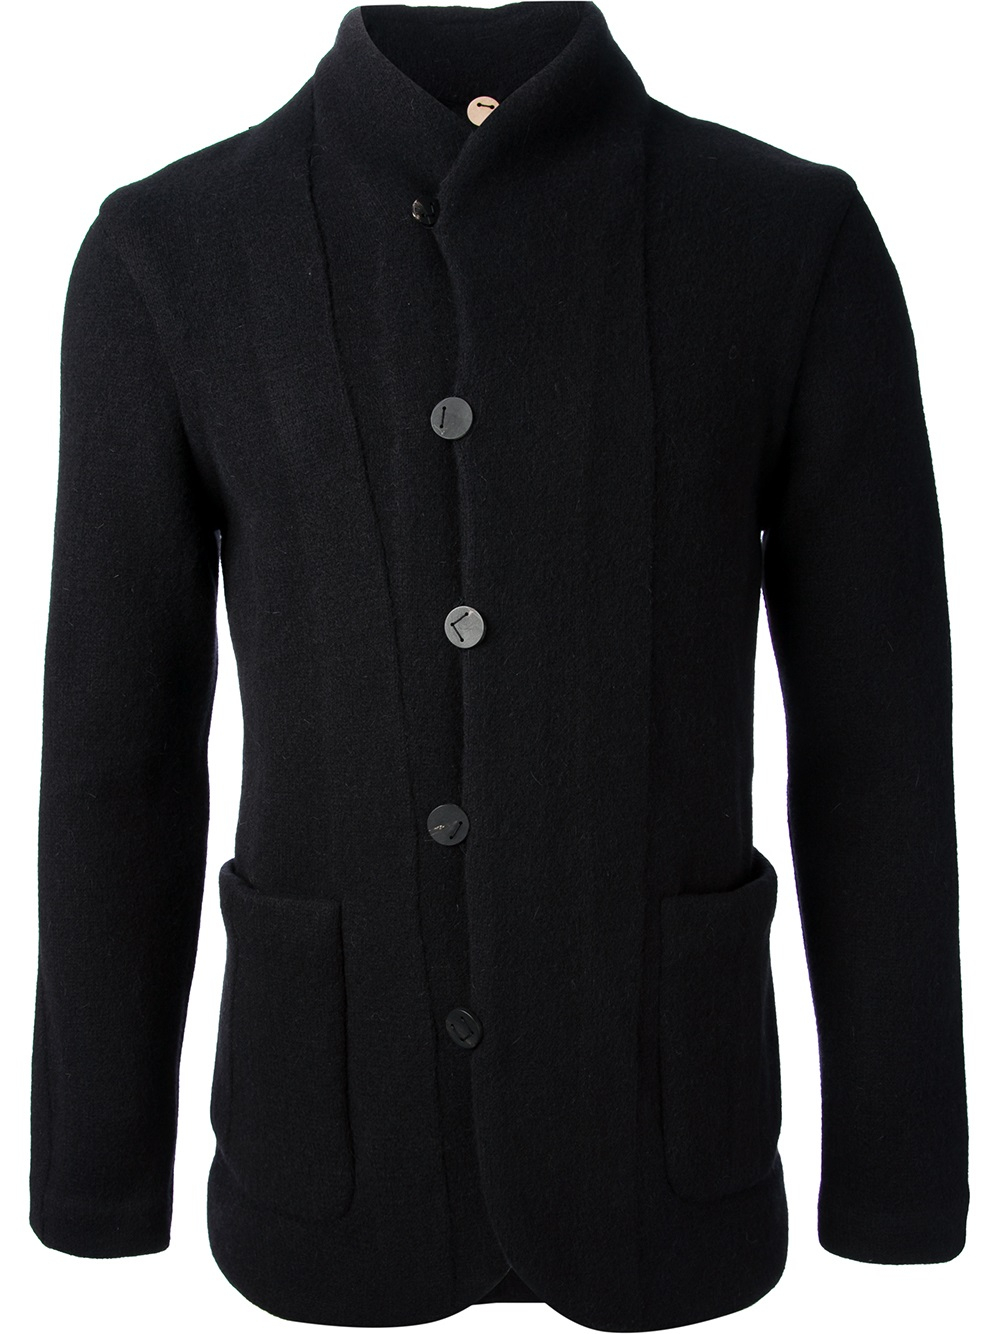 Lyst - Label Under Construction Shawl Collar Cardigan in Black for Men